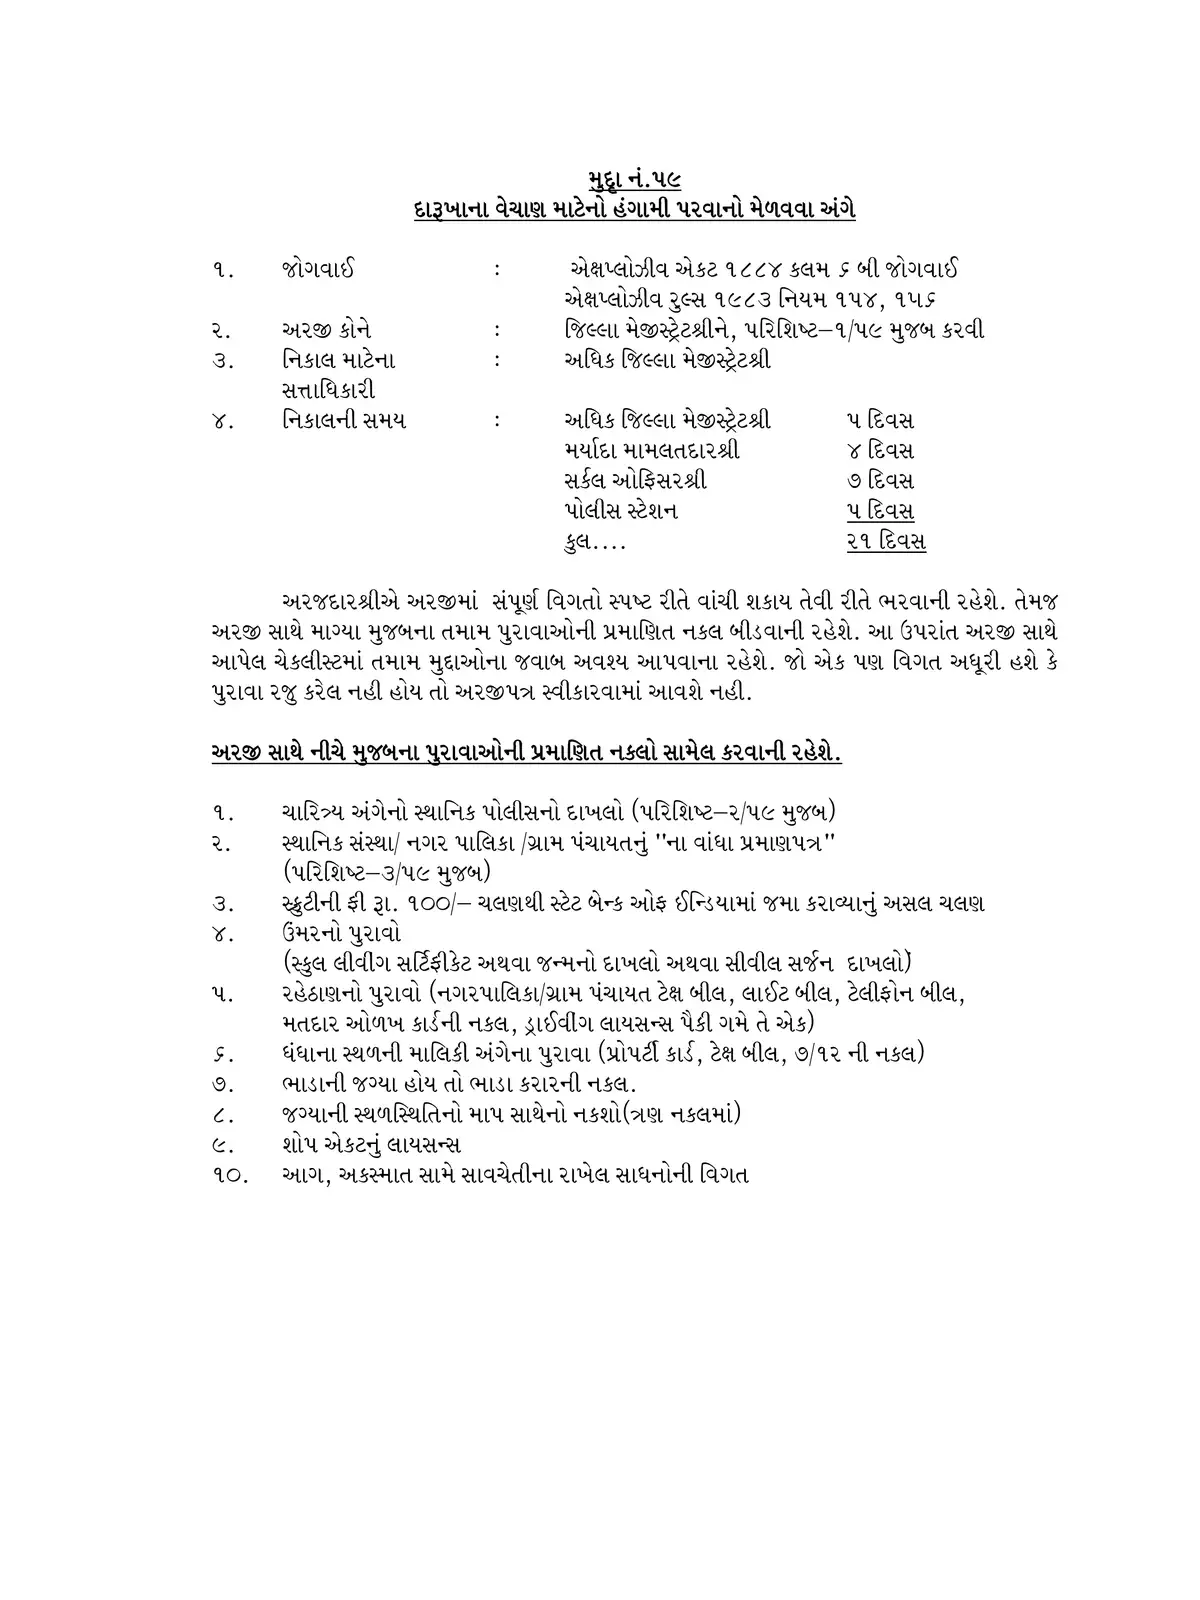 Gujarat Temporary Liquor Sale License Form